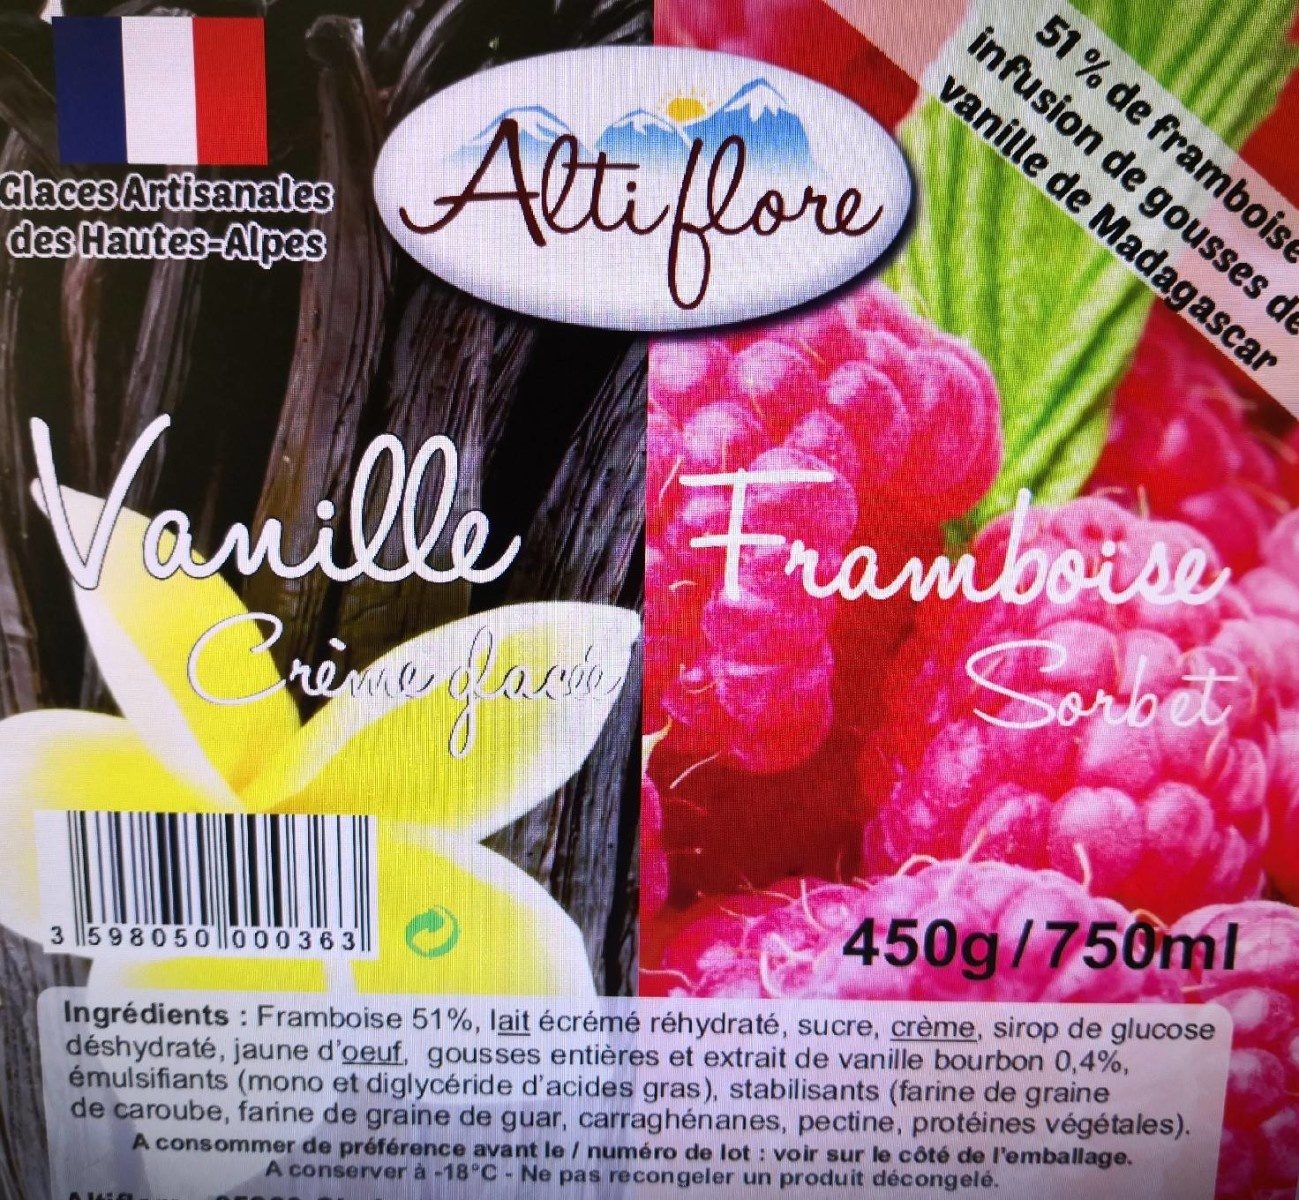 Crème glacée vanille framboise - Product - fr